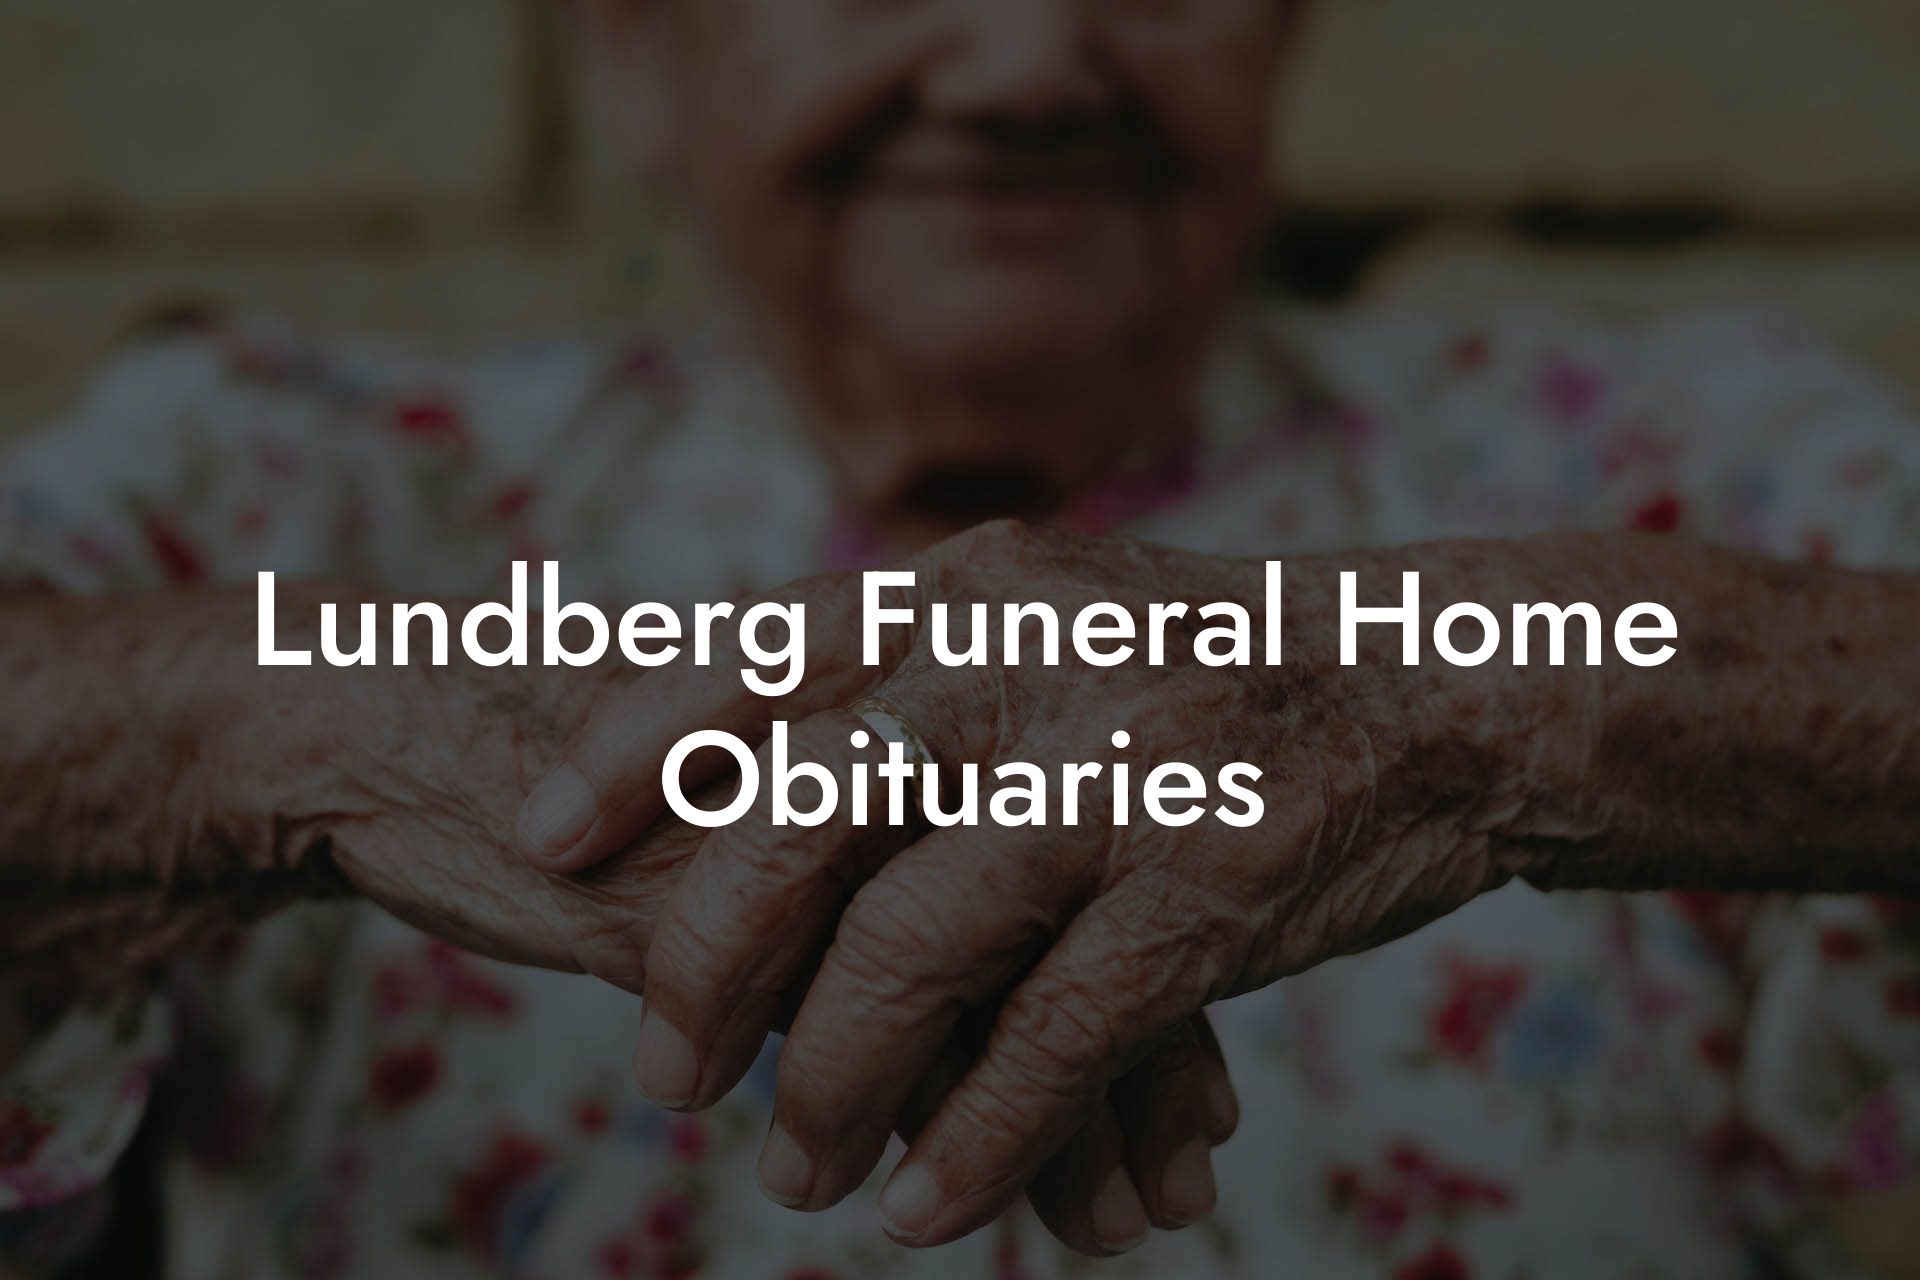 Lundberg Funeral Home Obituaries